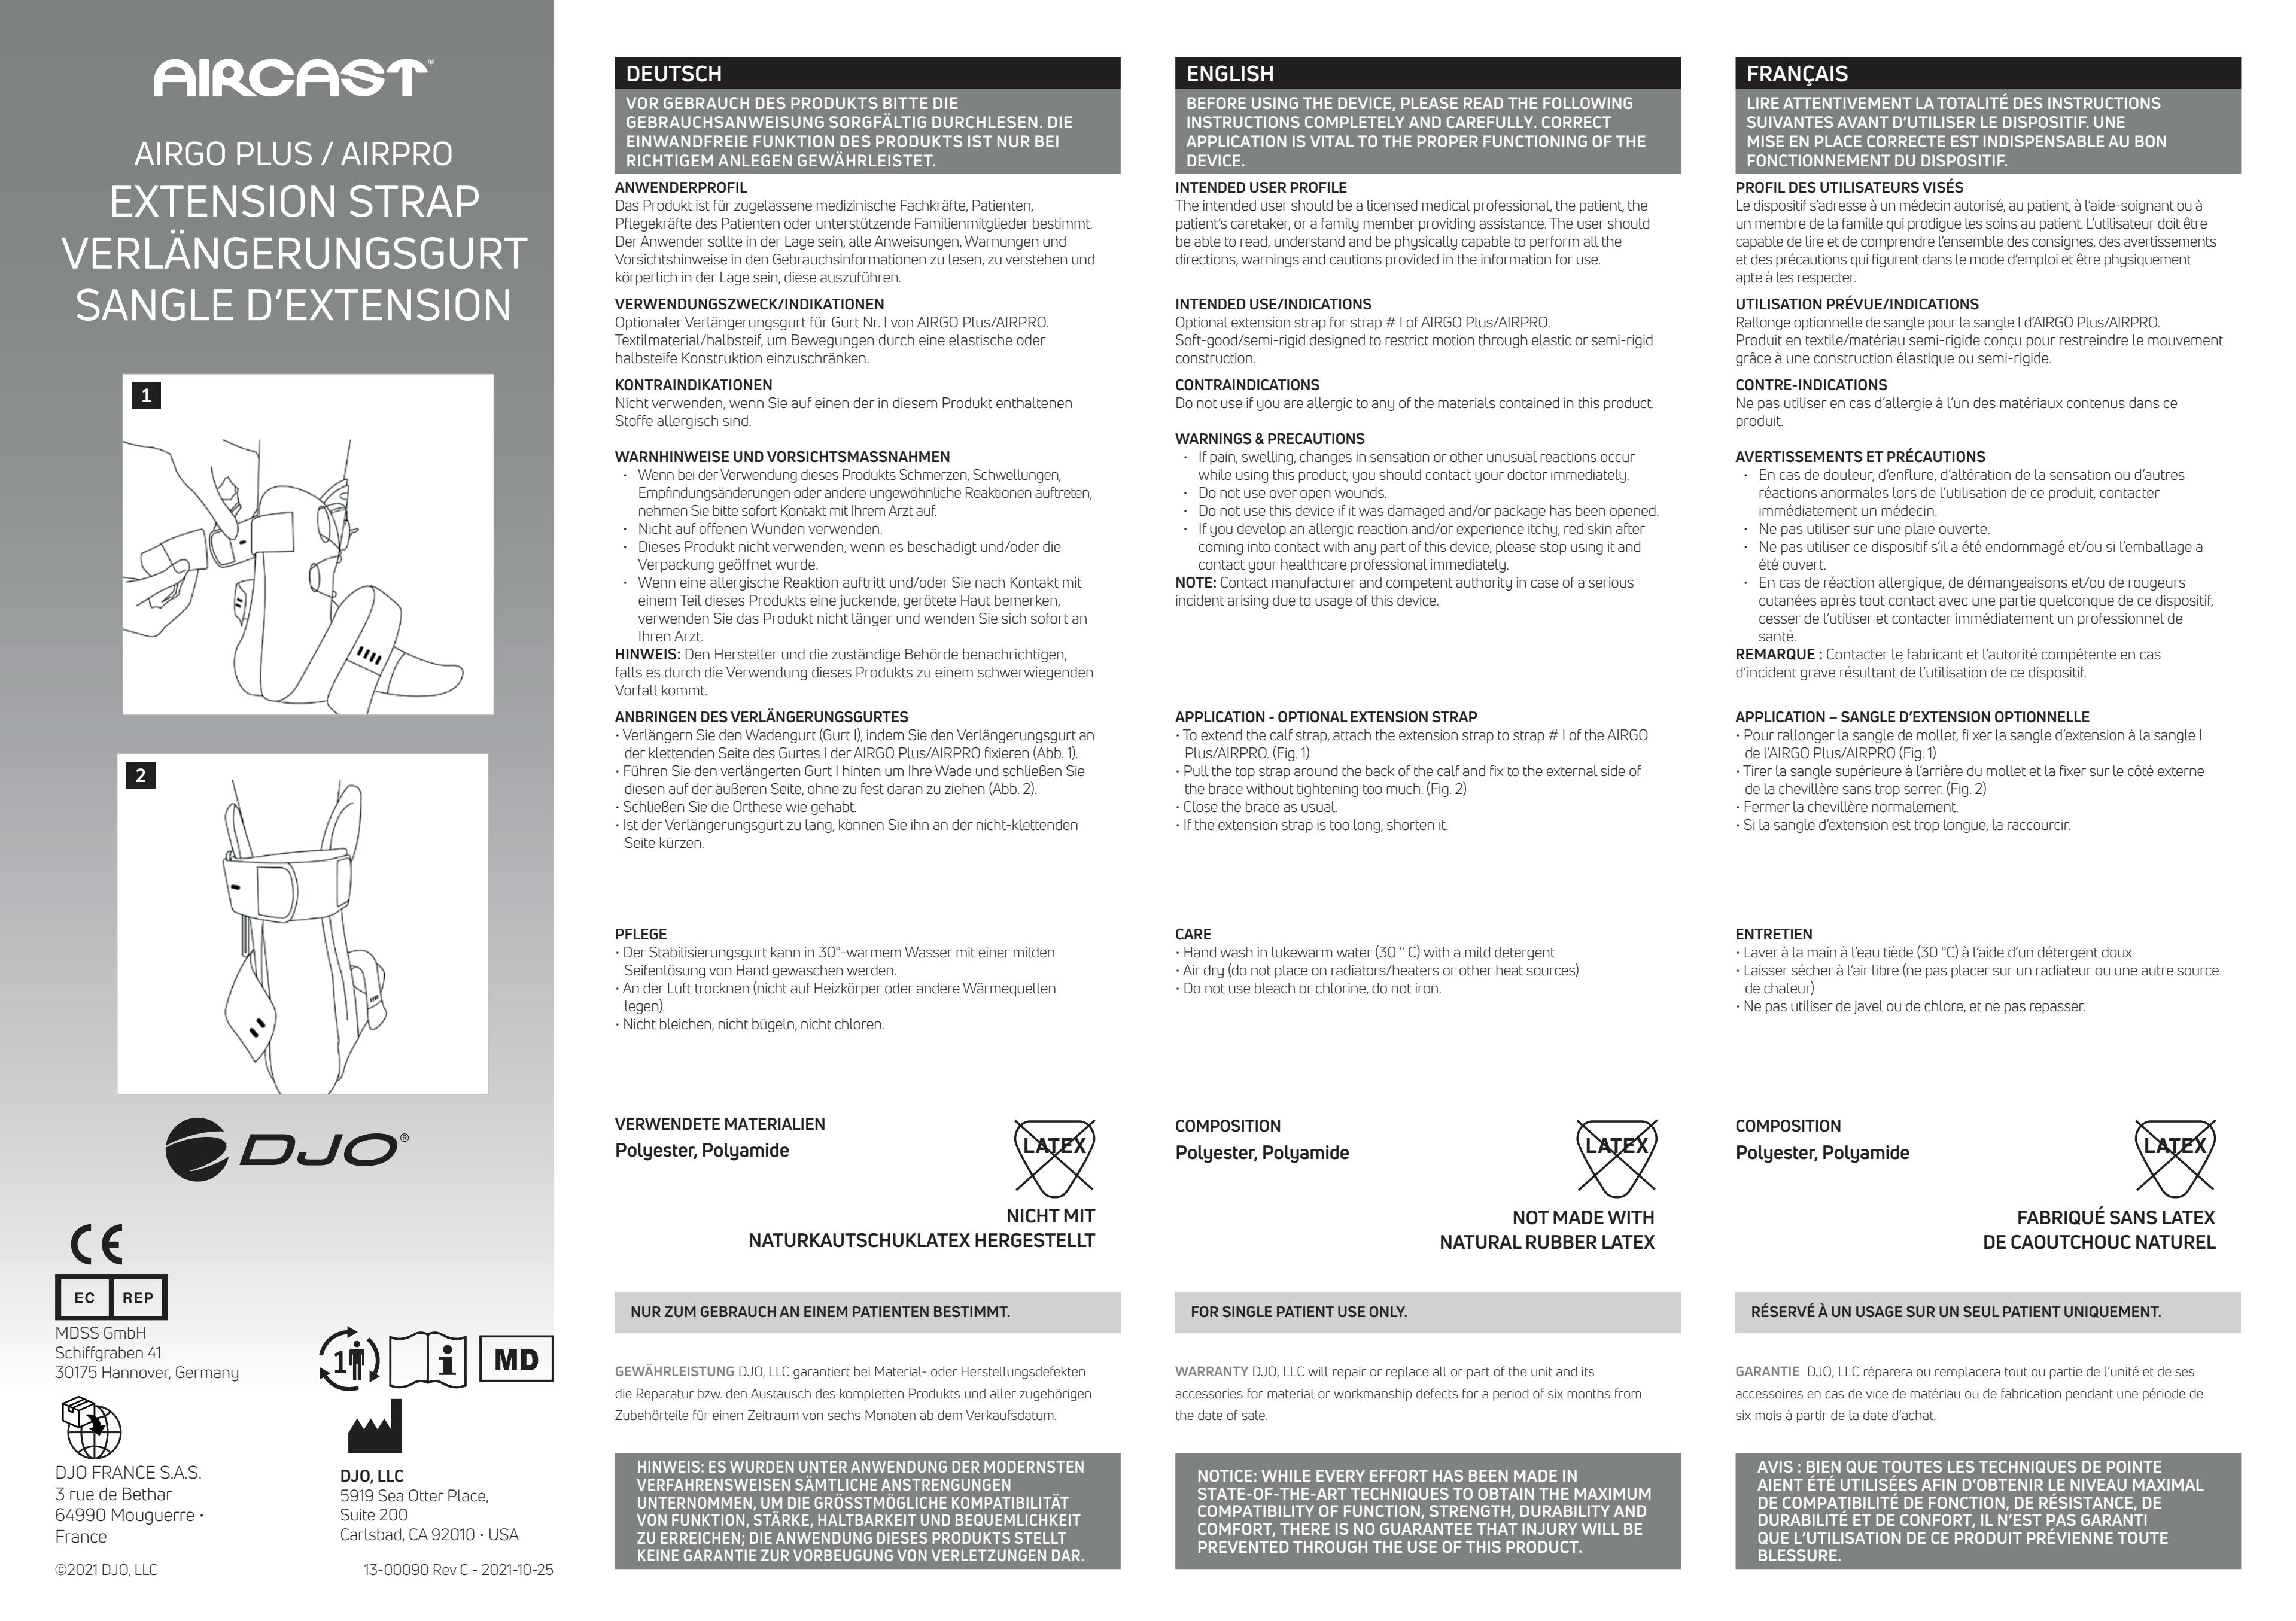 Gebrauchsanleitung-AIRCAST-Verlängerungsgurt-13-00090.pdf